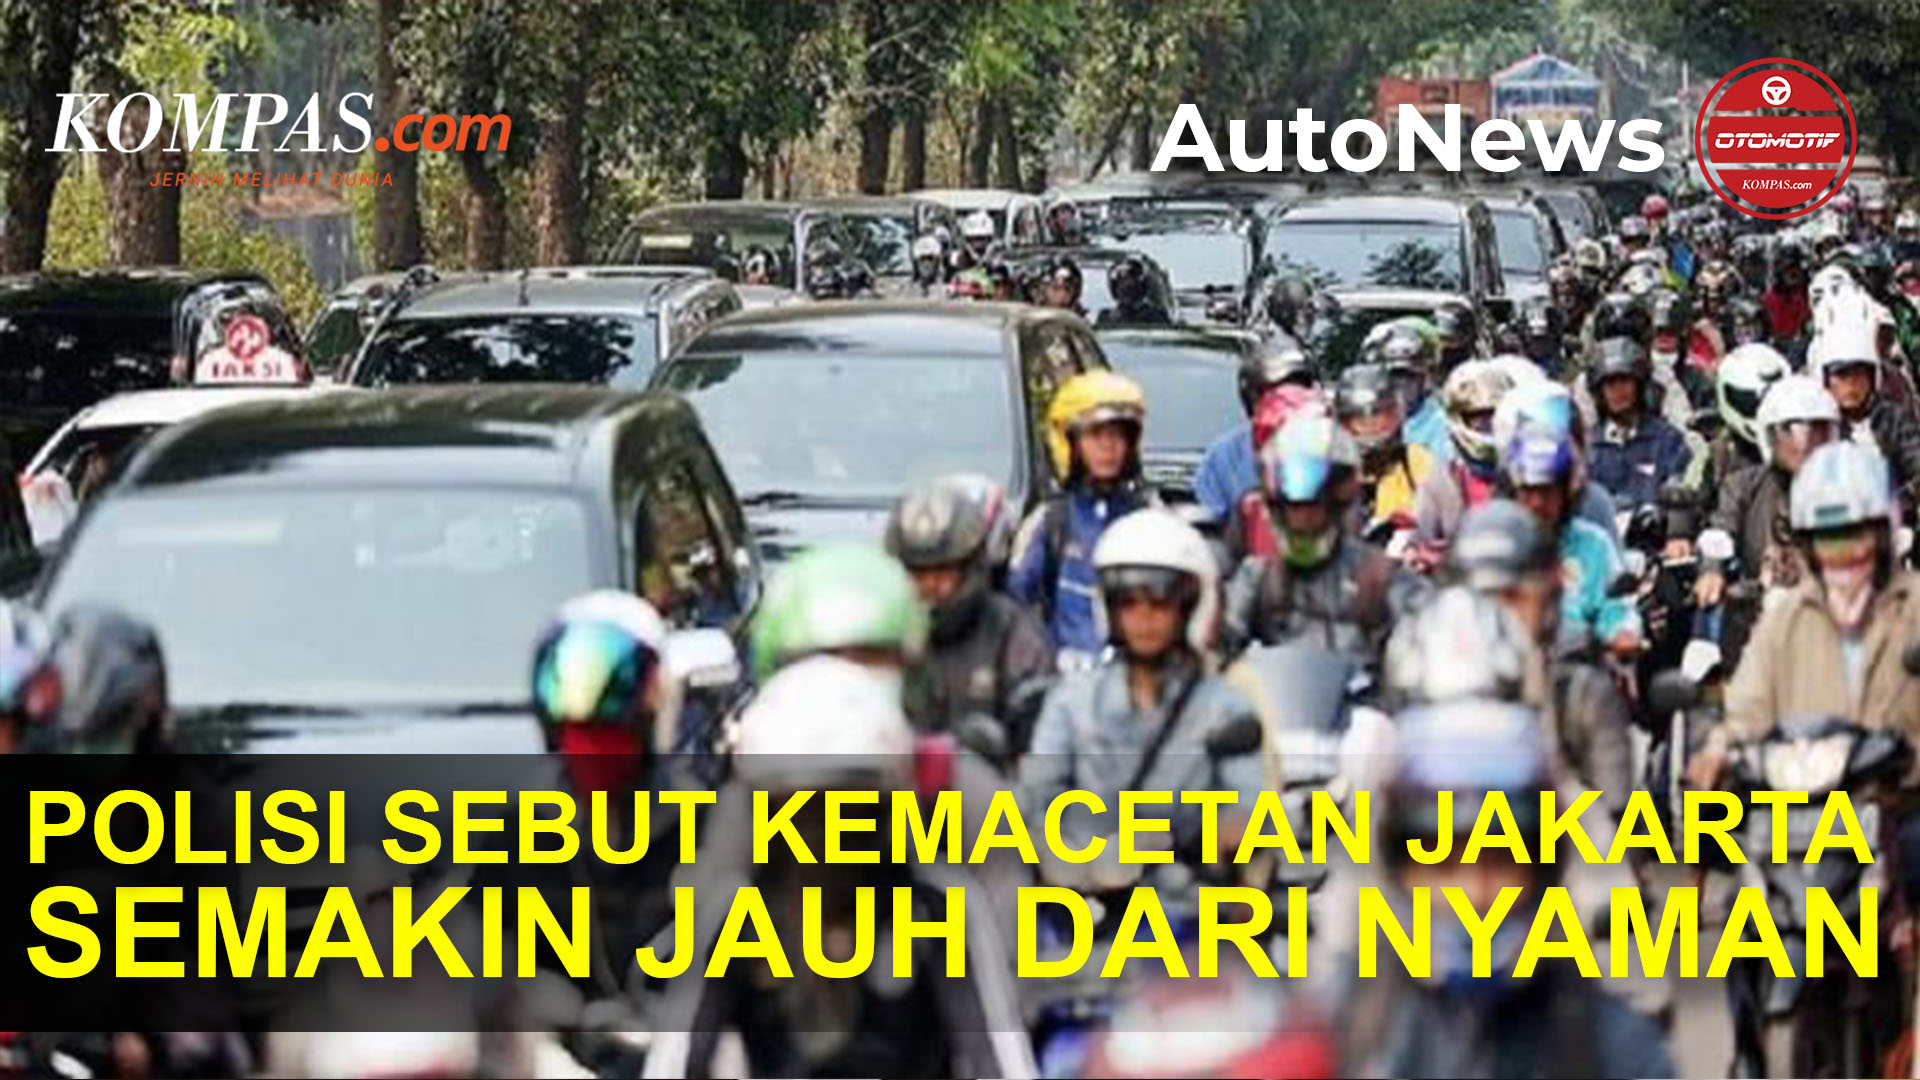 Kemacetan Jakarta Semakin Jauh dari Nyaman